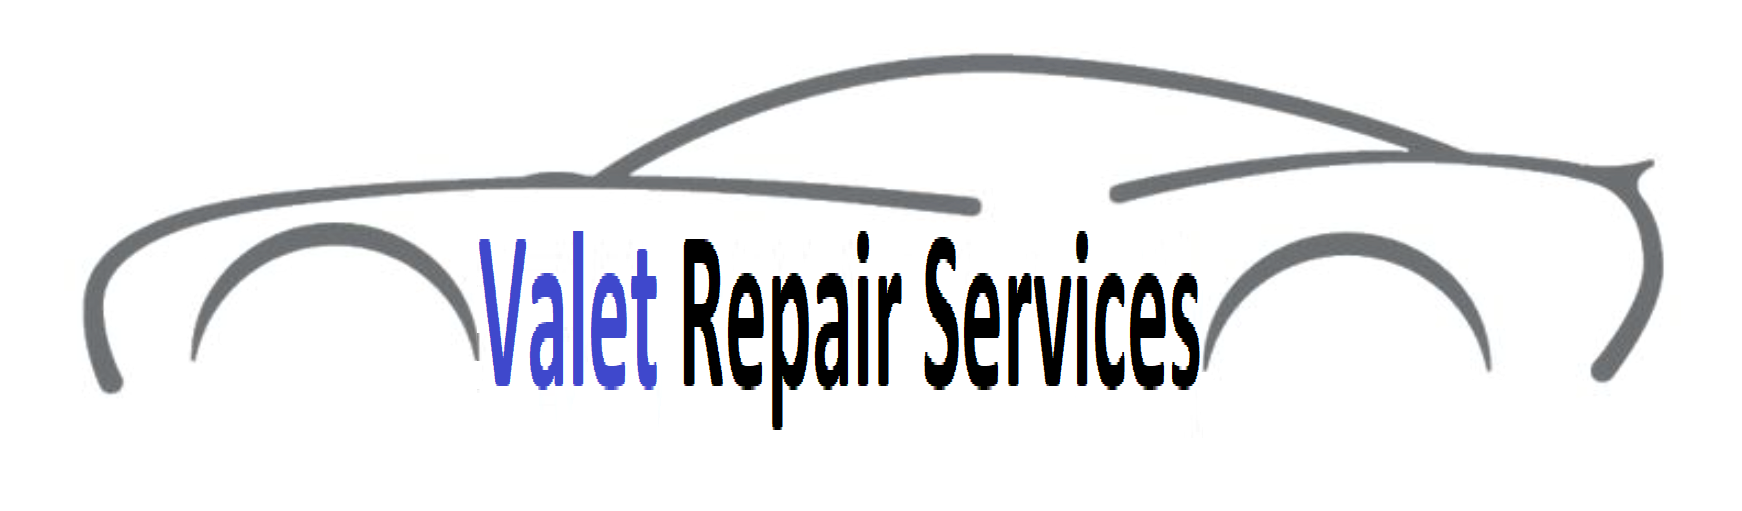 Valet Repair Services